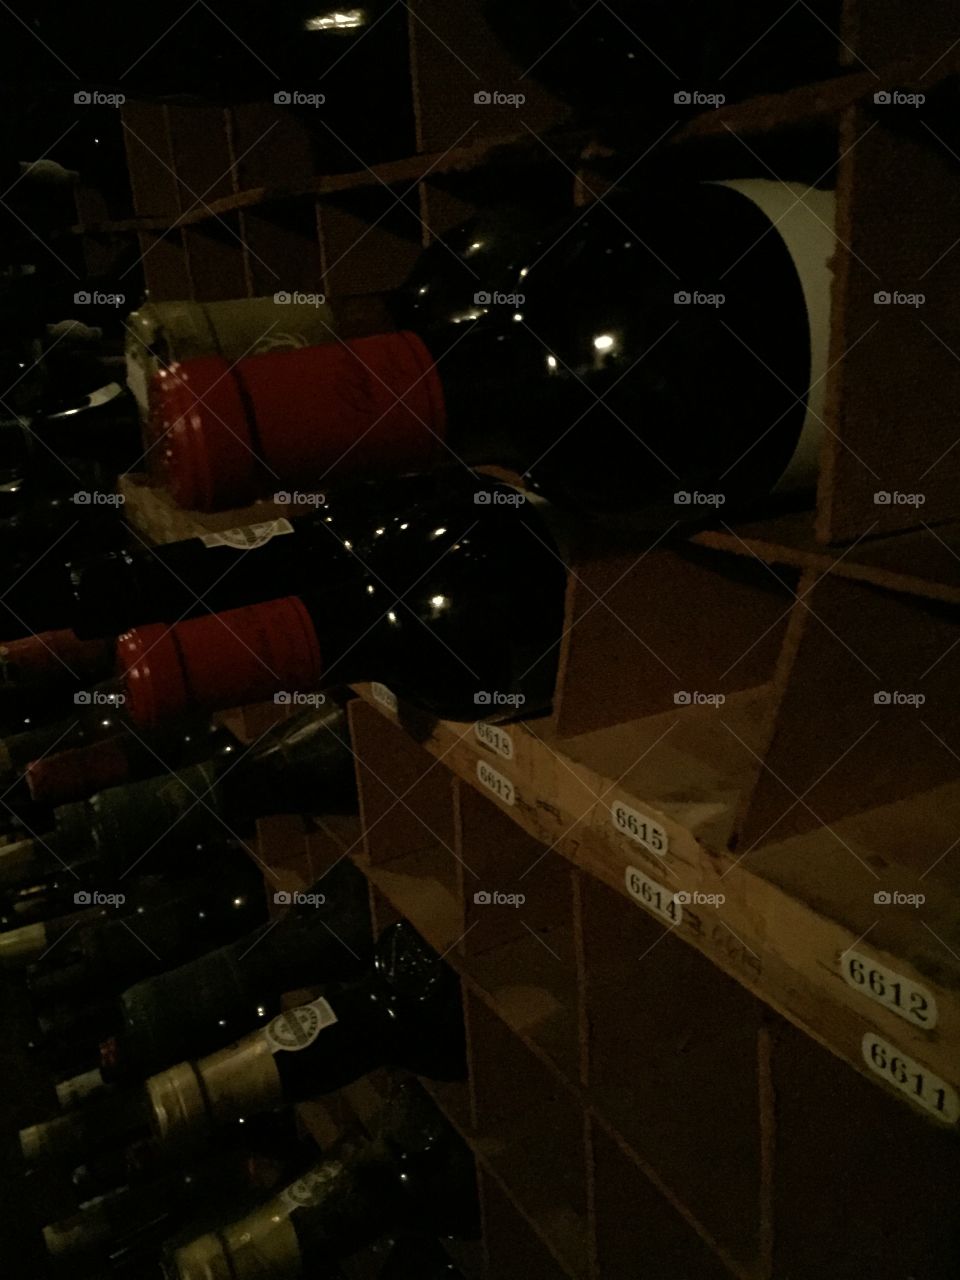 Bern’s Steakhouse wine cellar